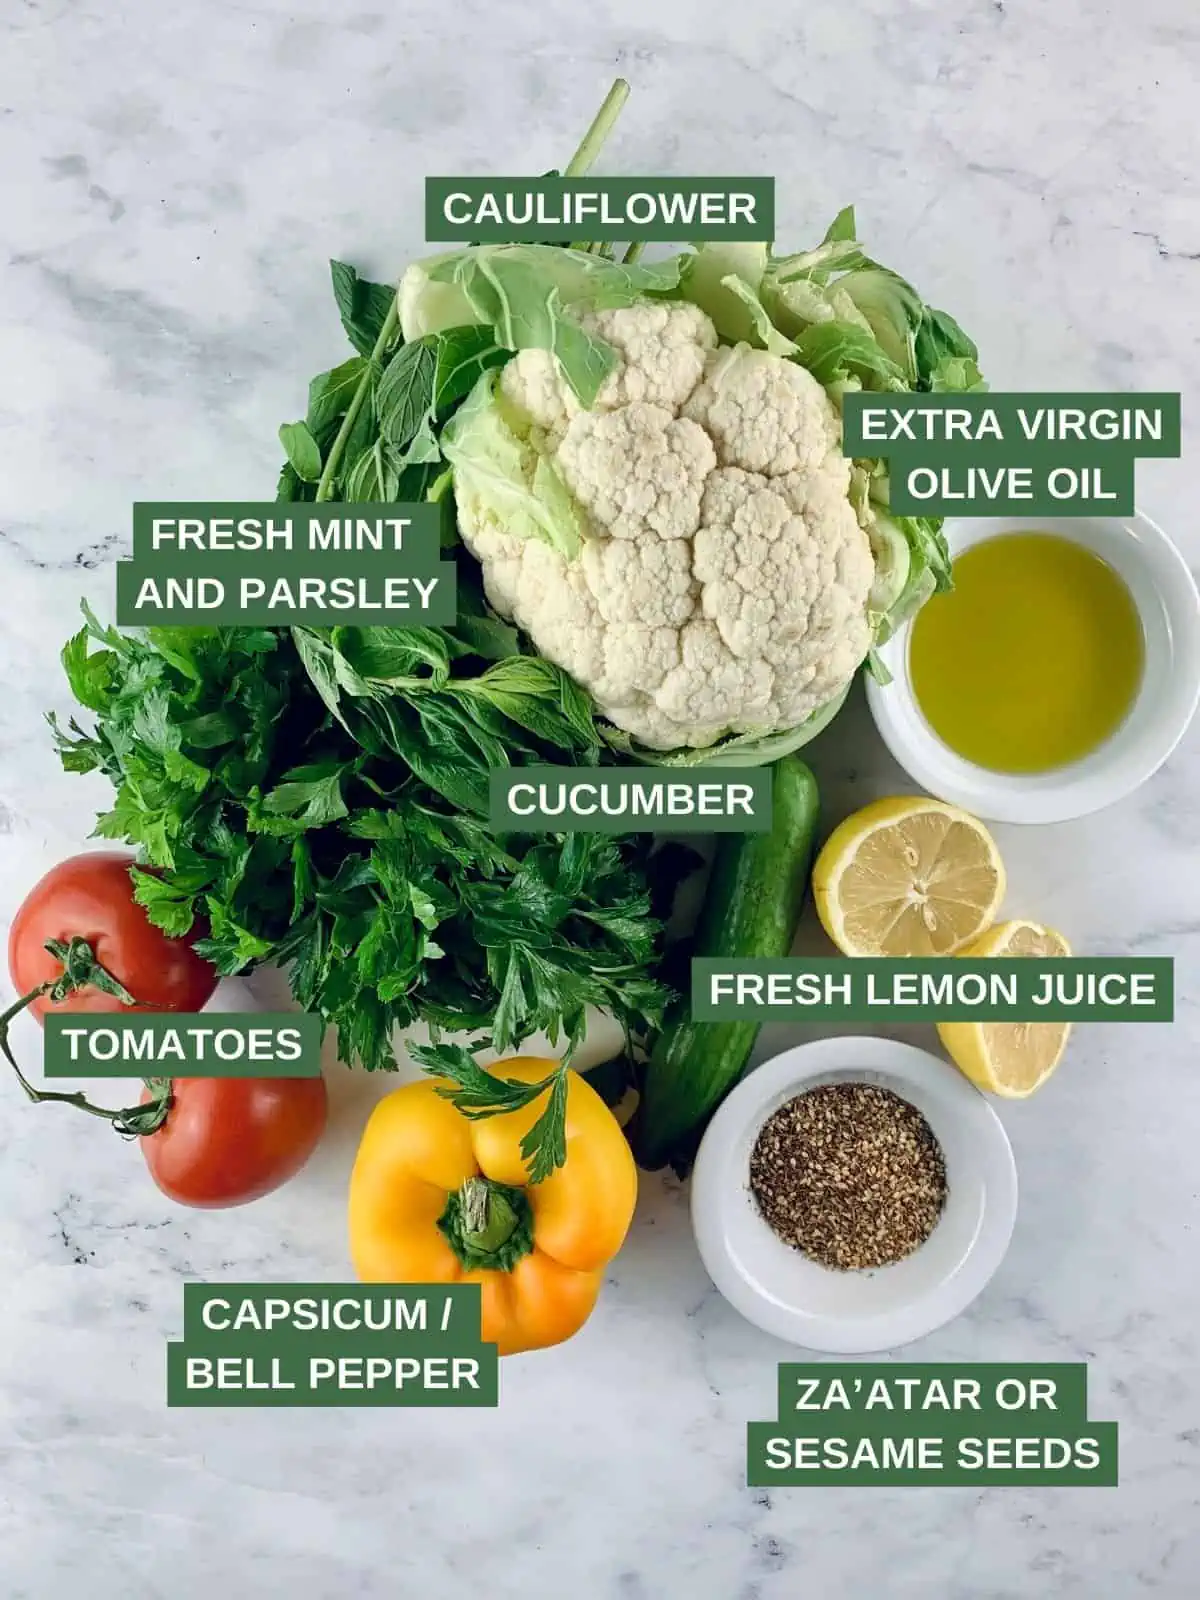 Labelled ingredients needed to make cauliflower tabbouleh.